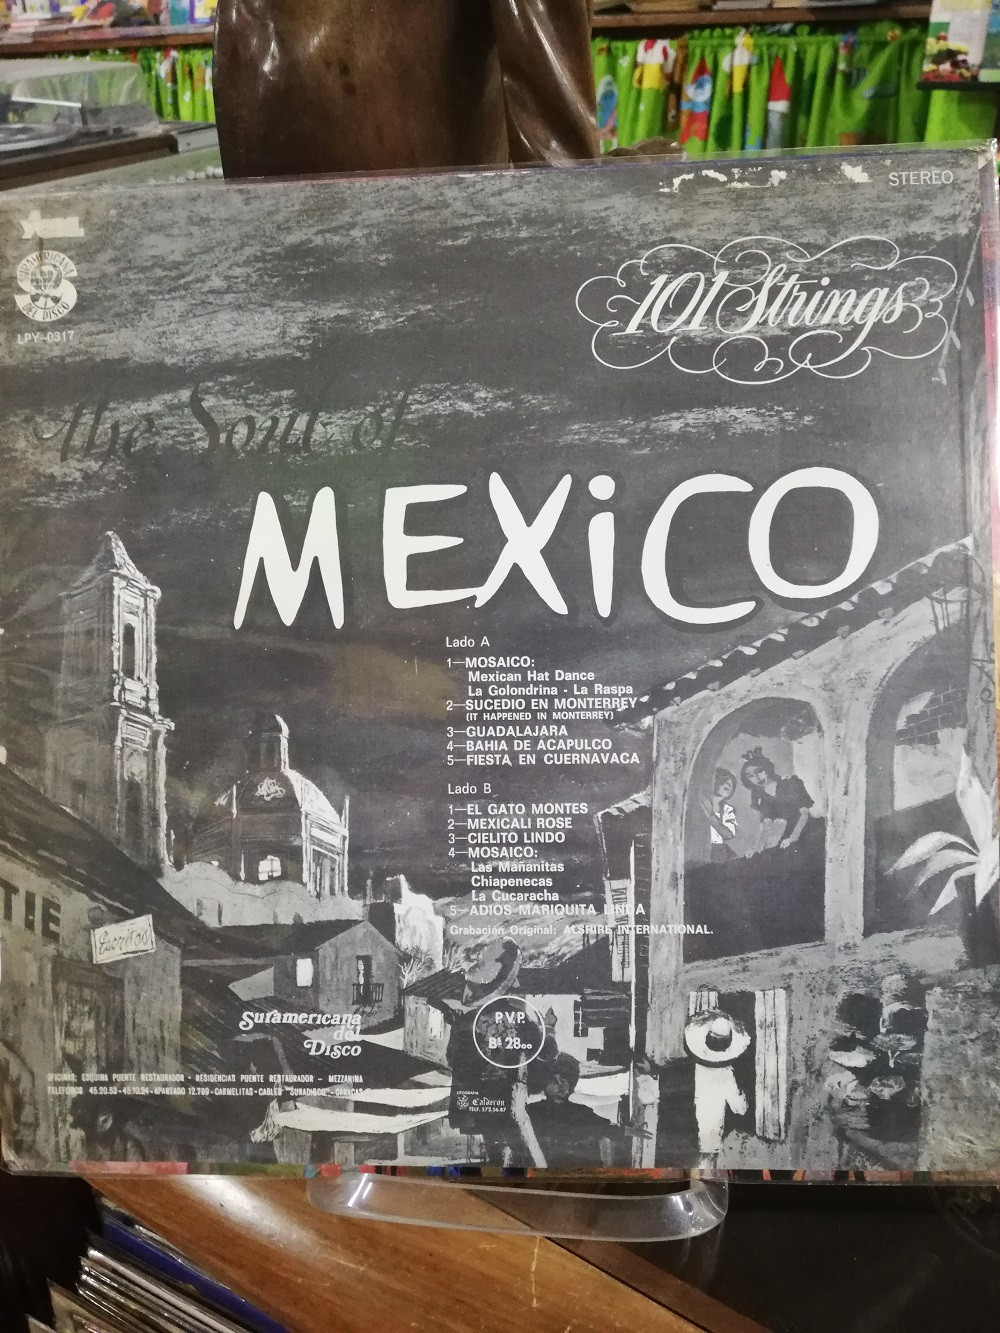 Imagen LP 101 STRINGS - THE SOUL OF MEXCO 2